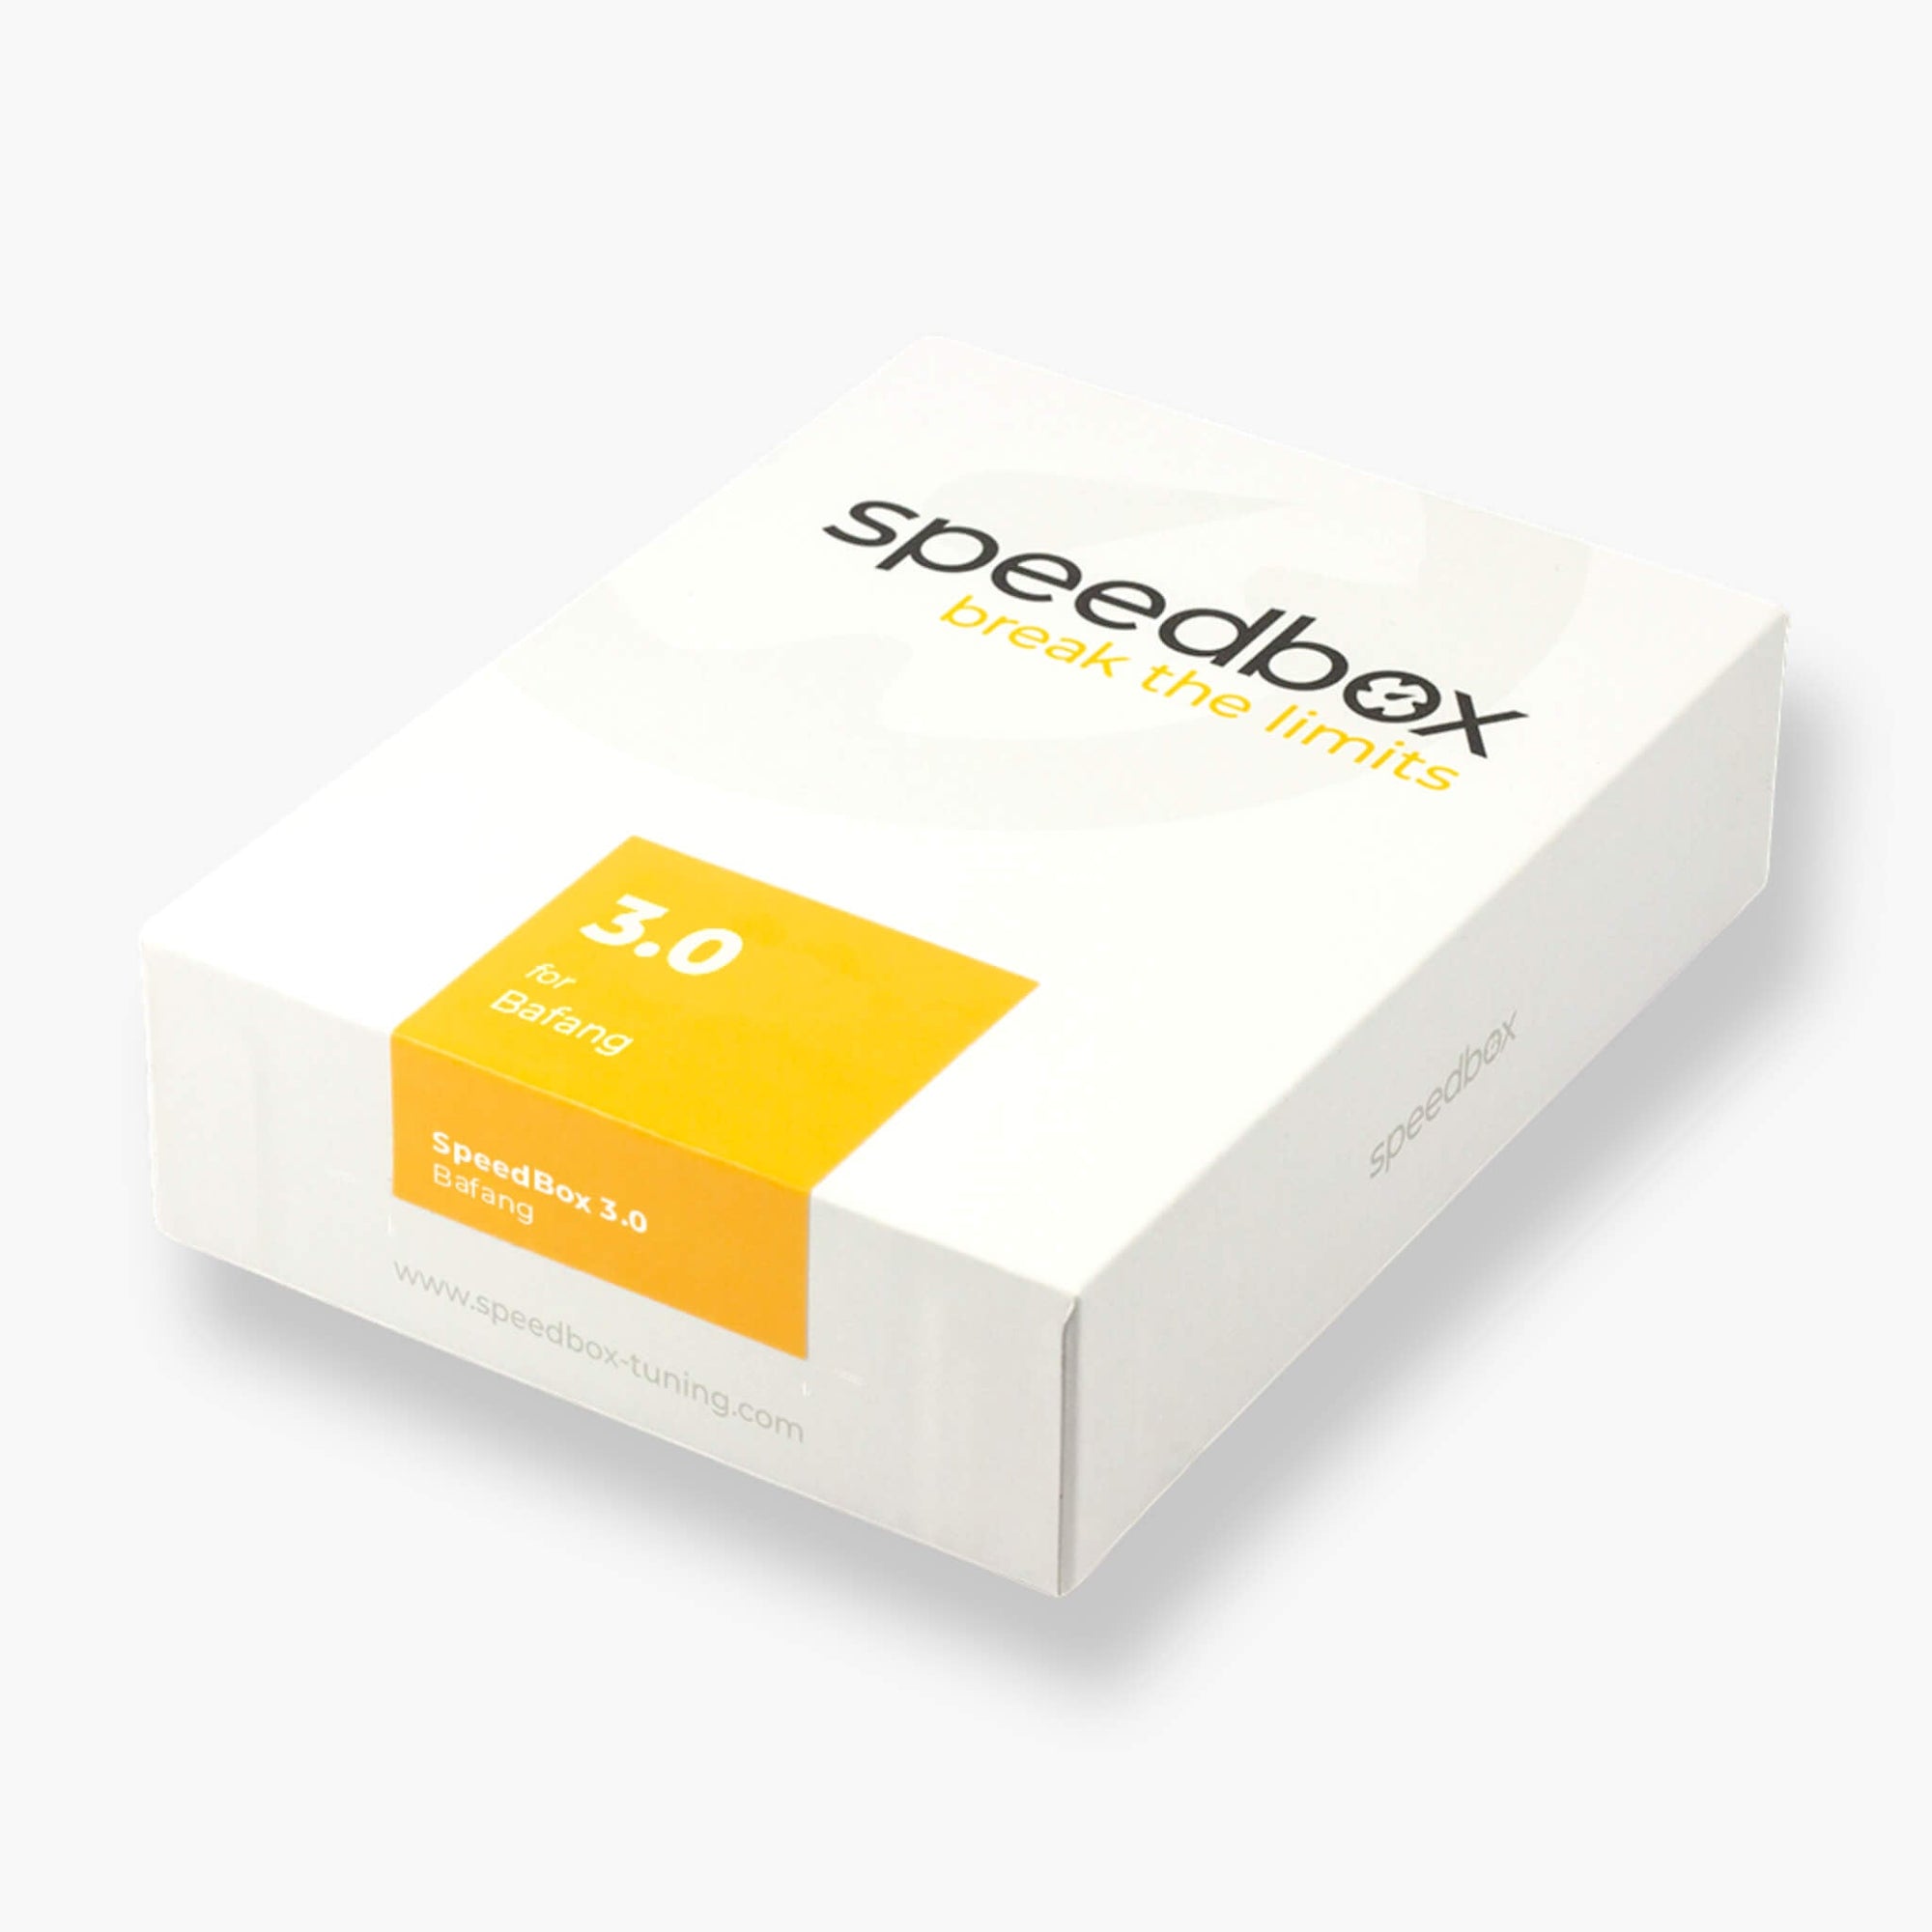 SpeedBox 3.0 B.Tuning for Bafang ( 3 pin kontakt) - ELSYKKEL-TRIM med App! - ebiketech